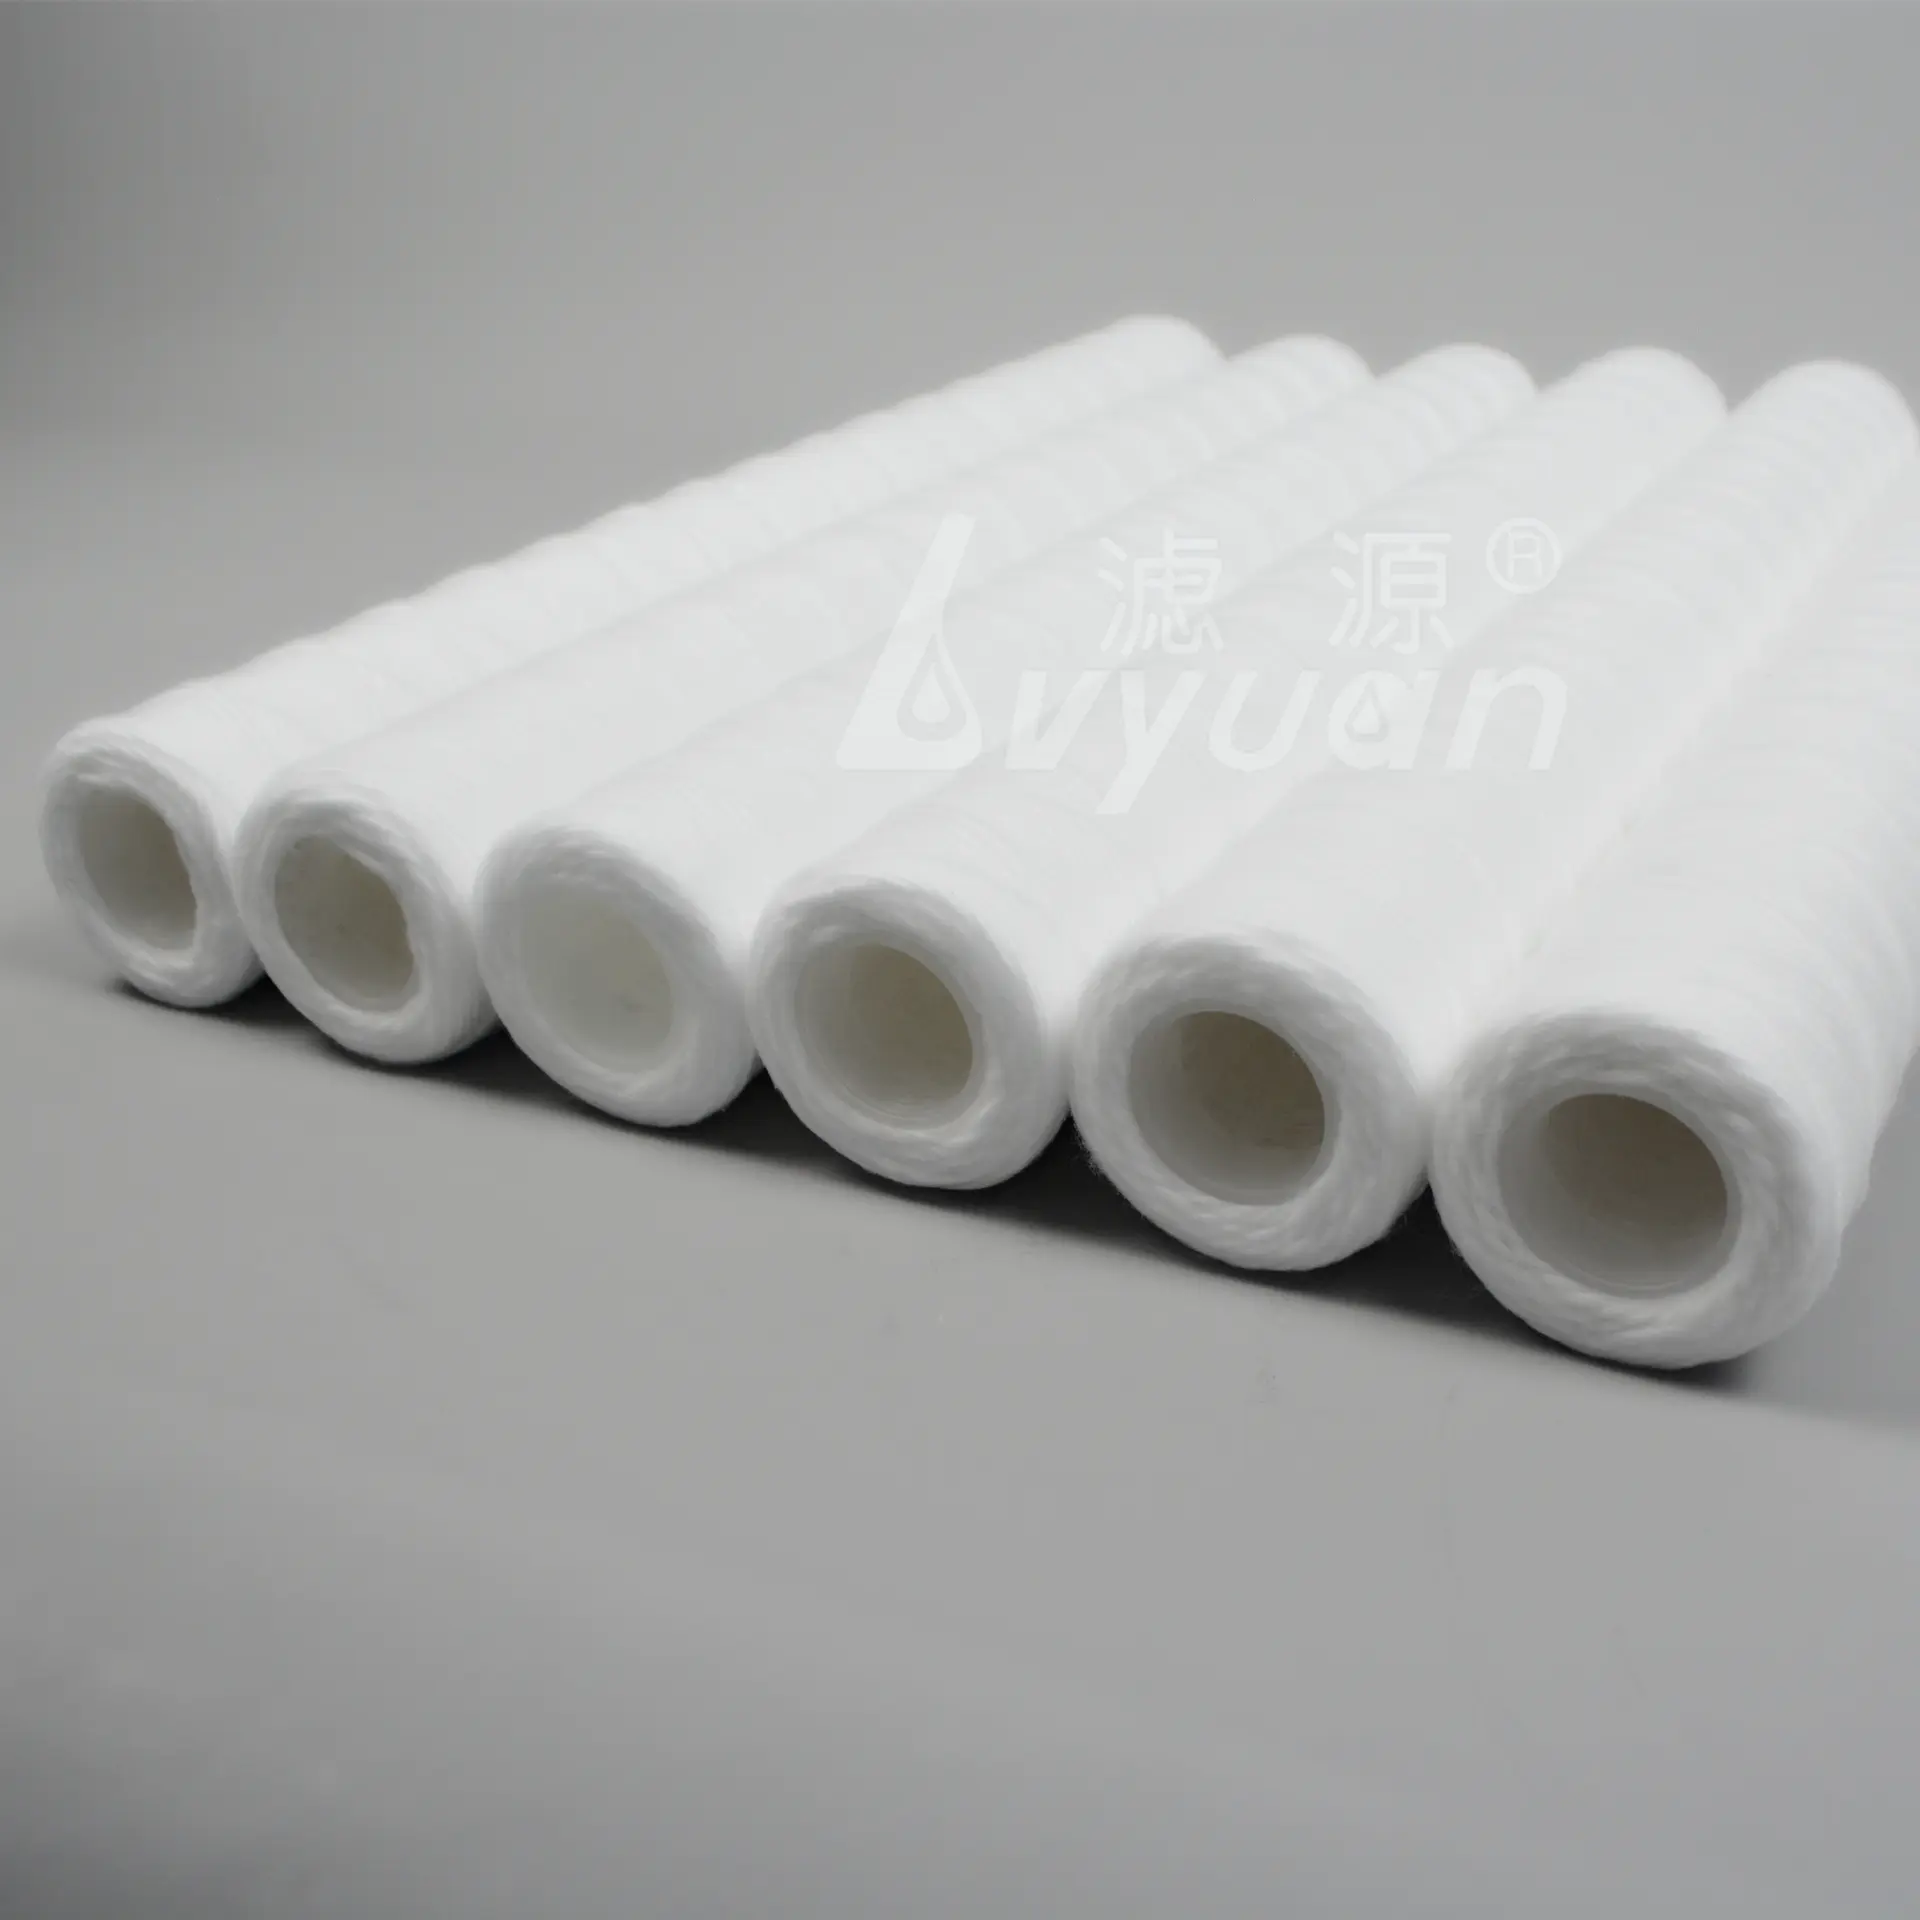 5 micron spun polypropylene water filter cartridge/string wound filter for juice/coffee filtration